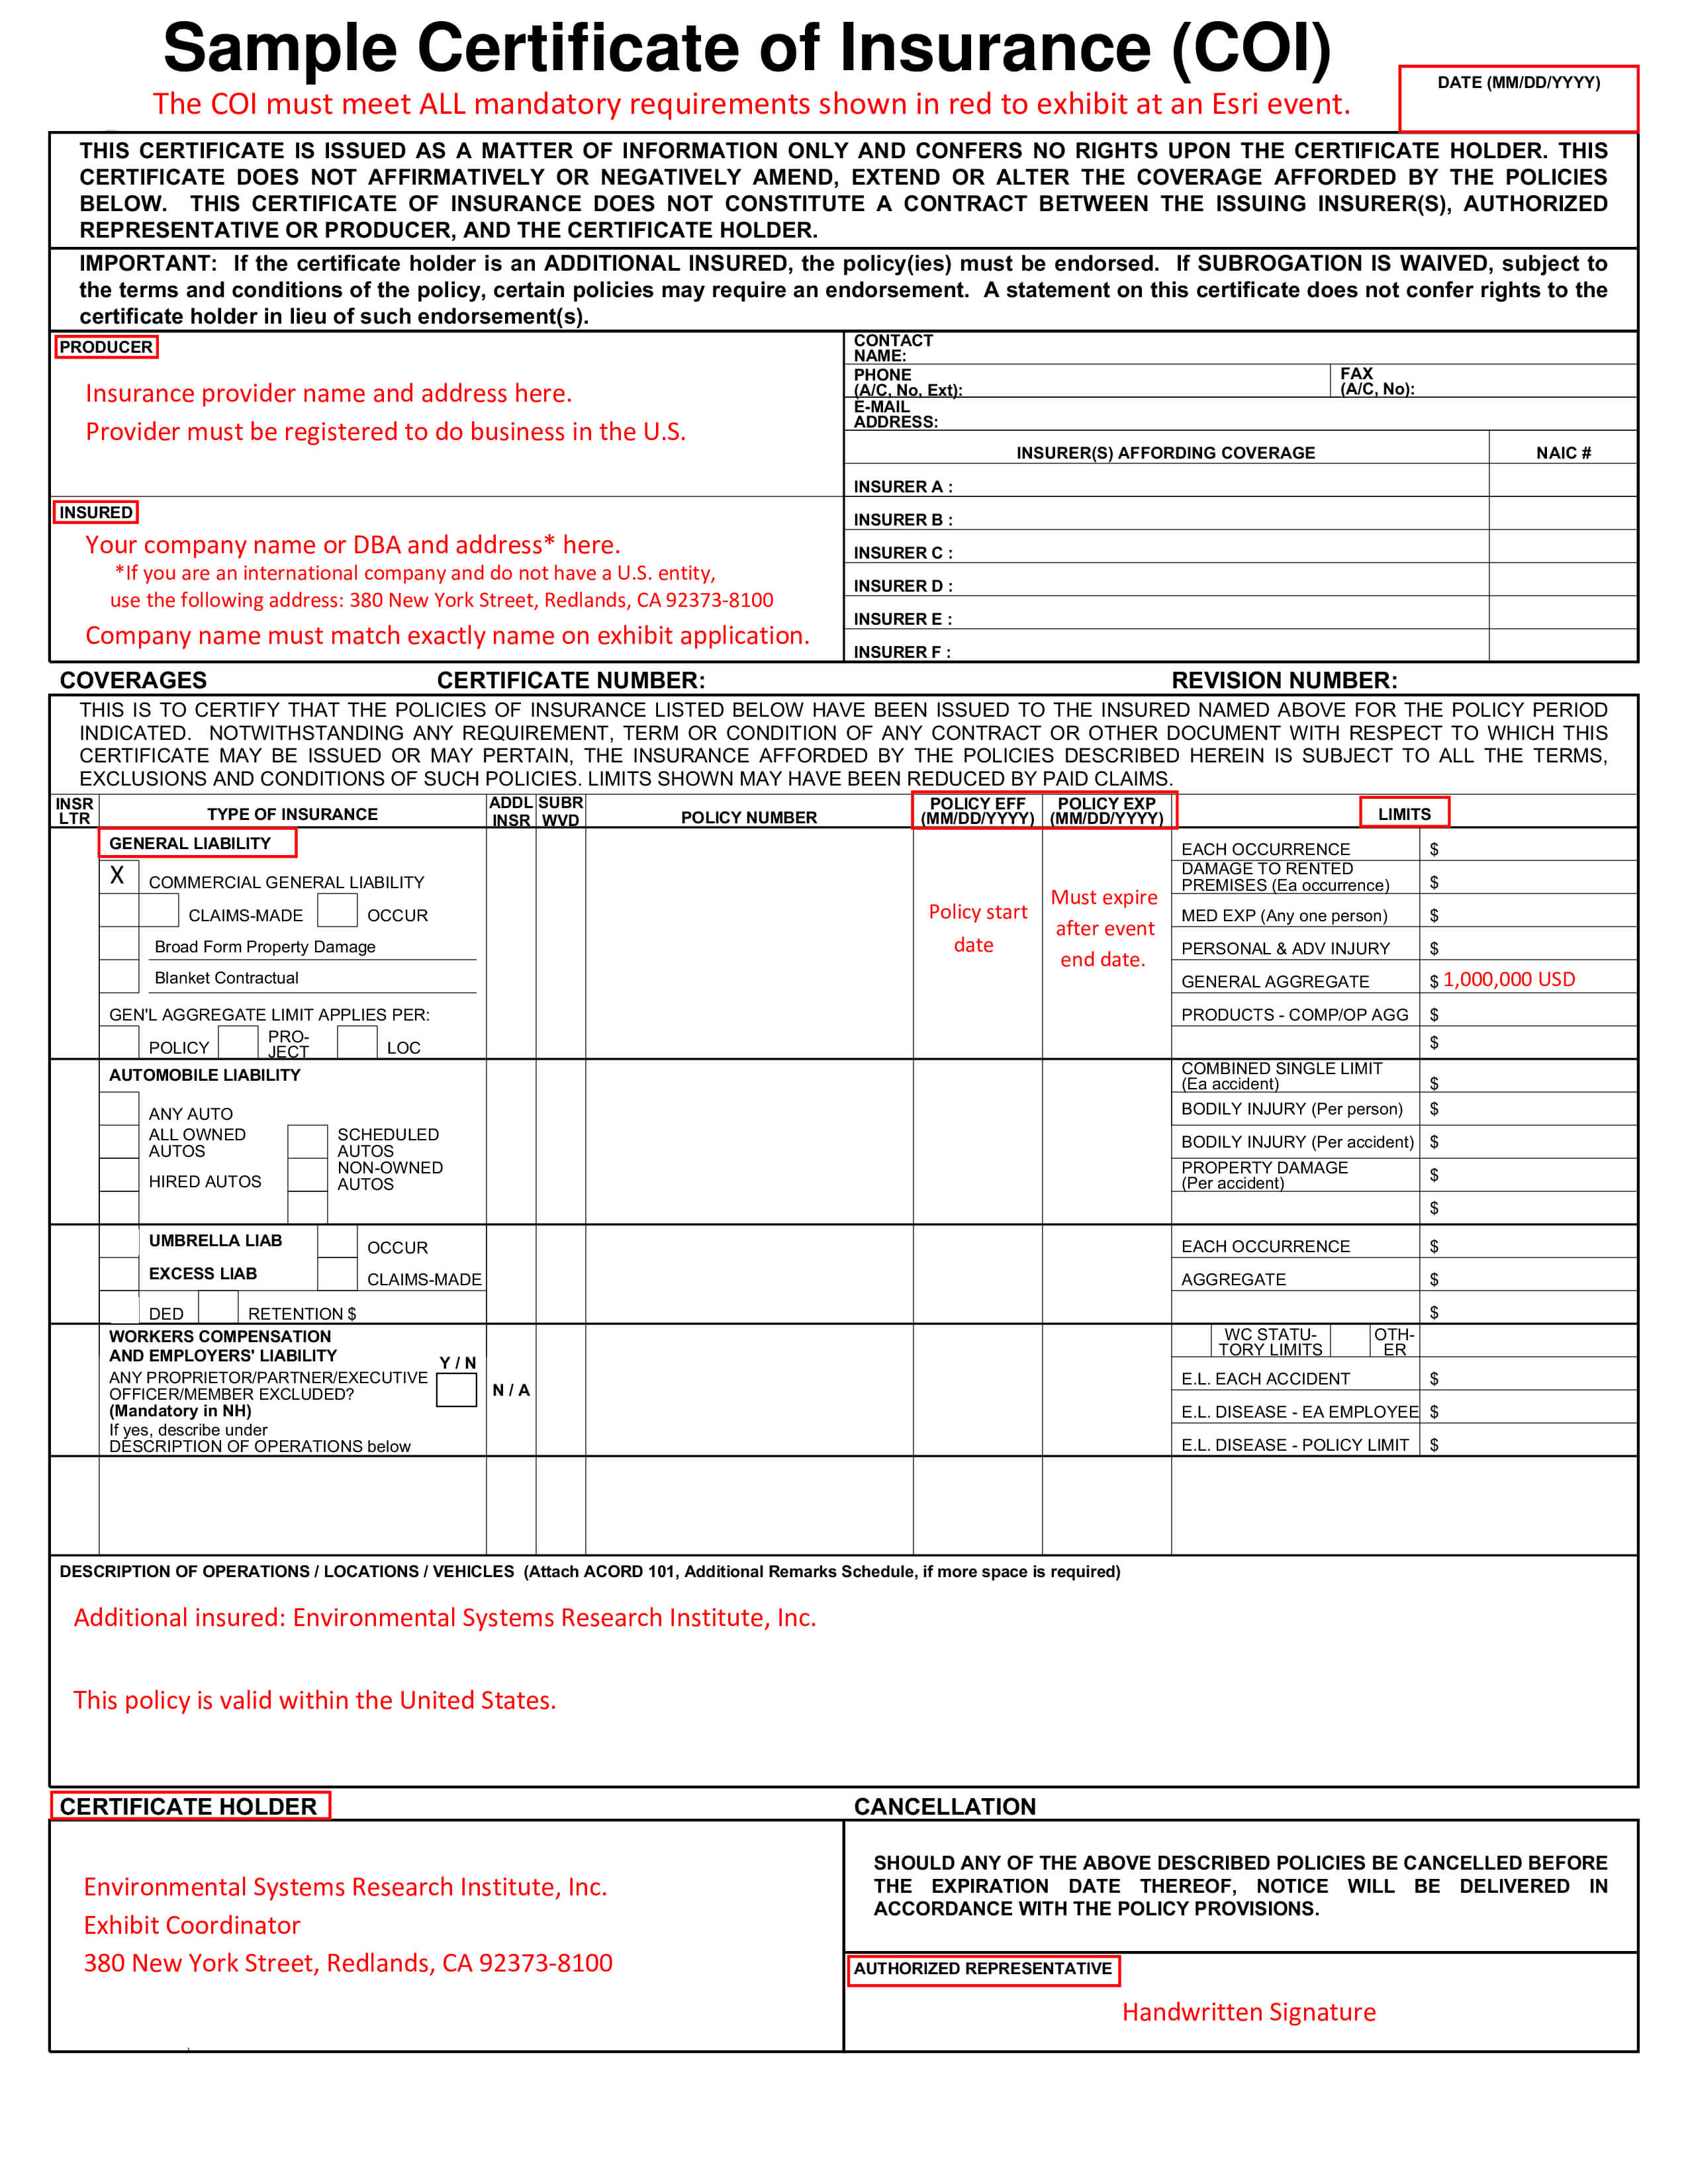 Sample Certificate Of Insurance (Coi) – Sample Certificate Throughout Certificate Of Insurance Template